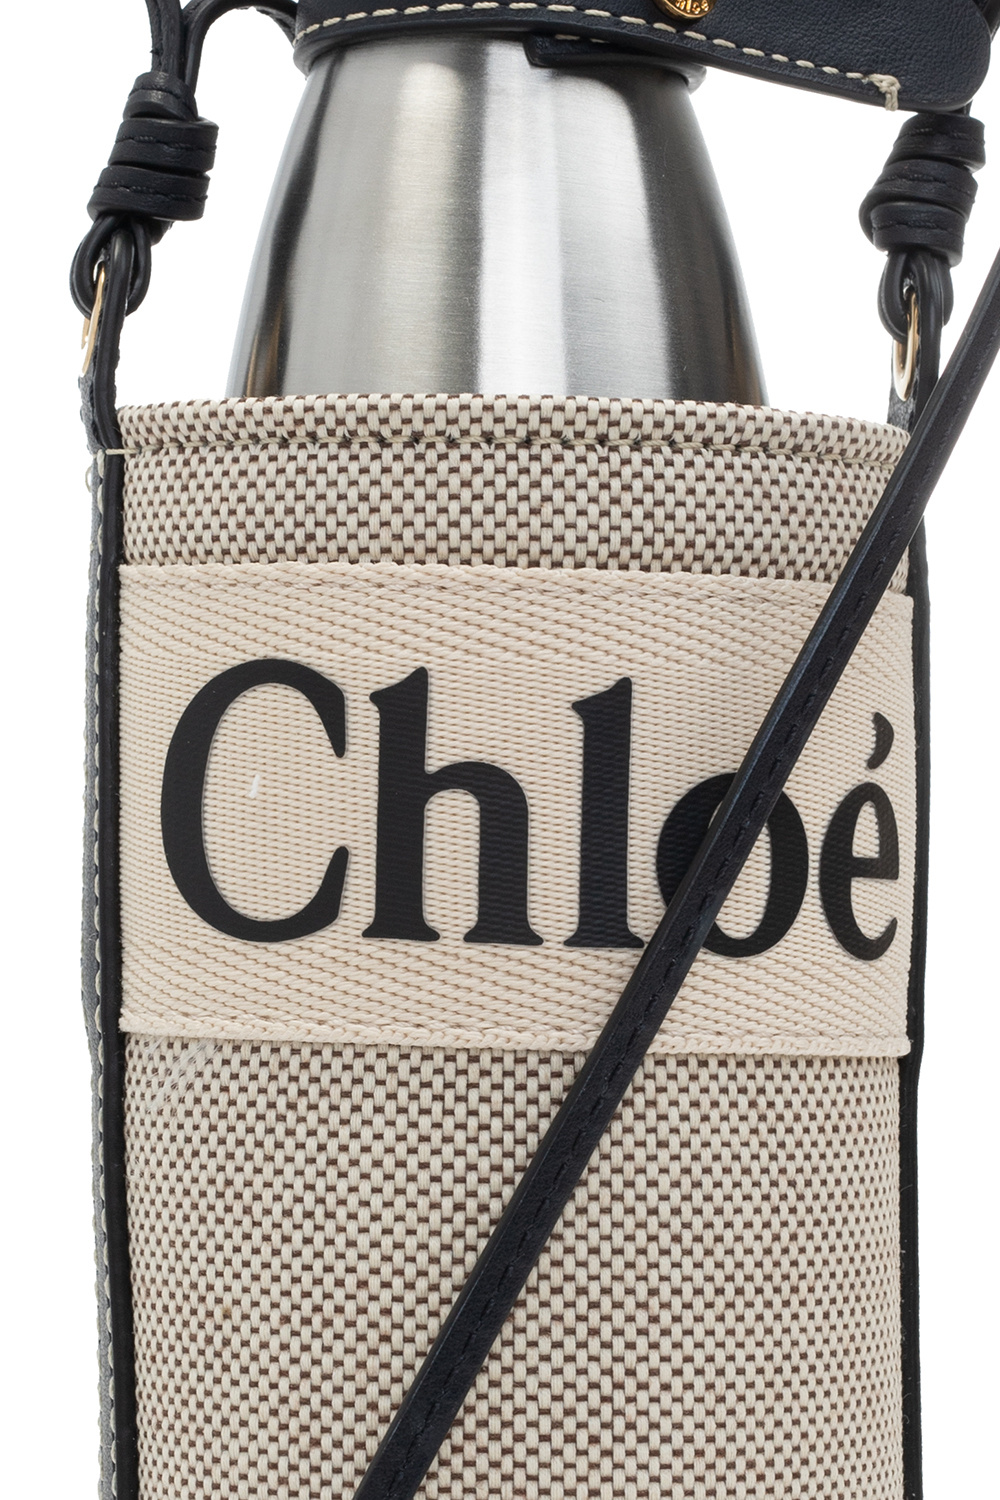 Chloé chloe black small drew shoulder bag item